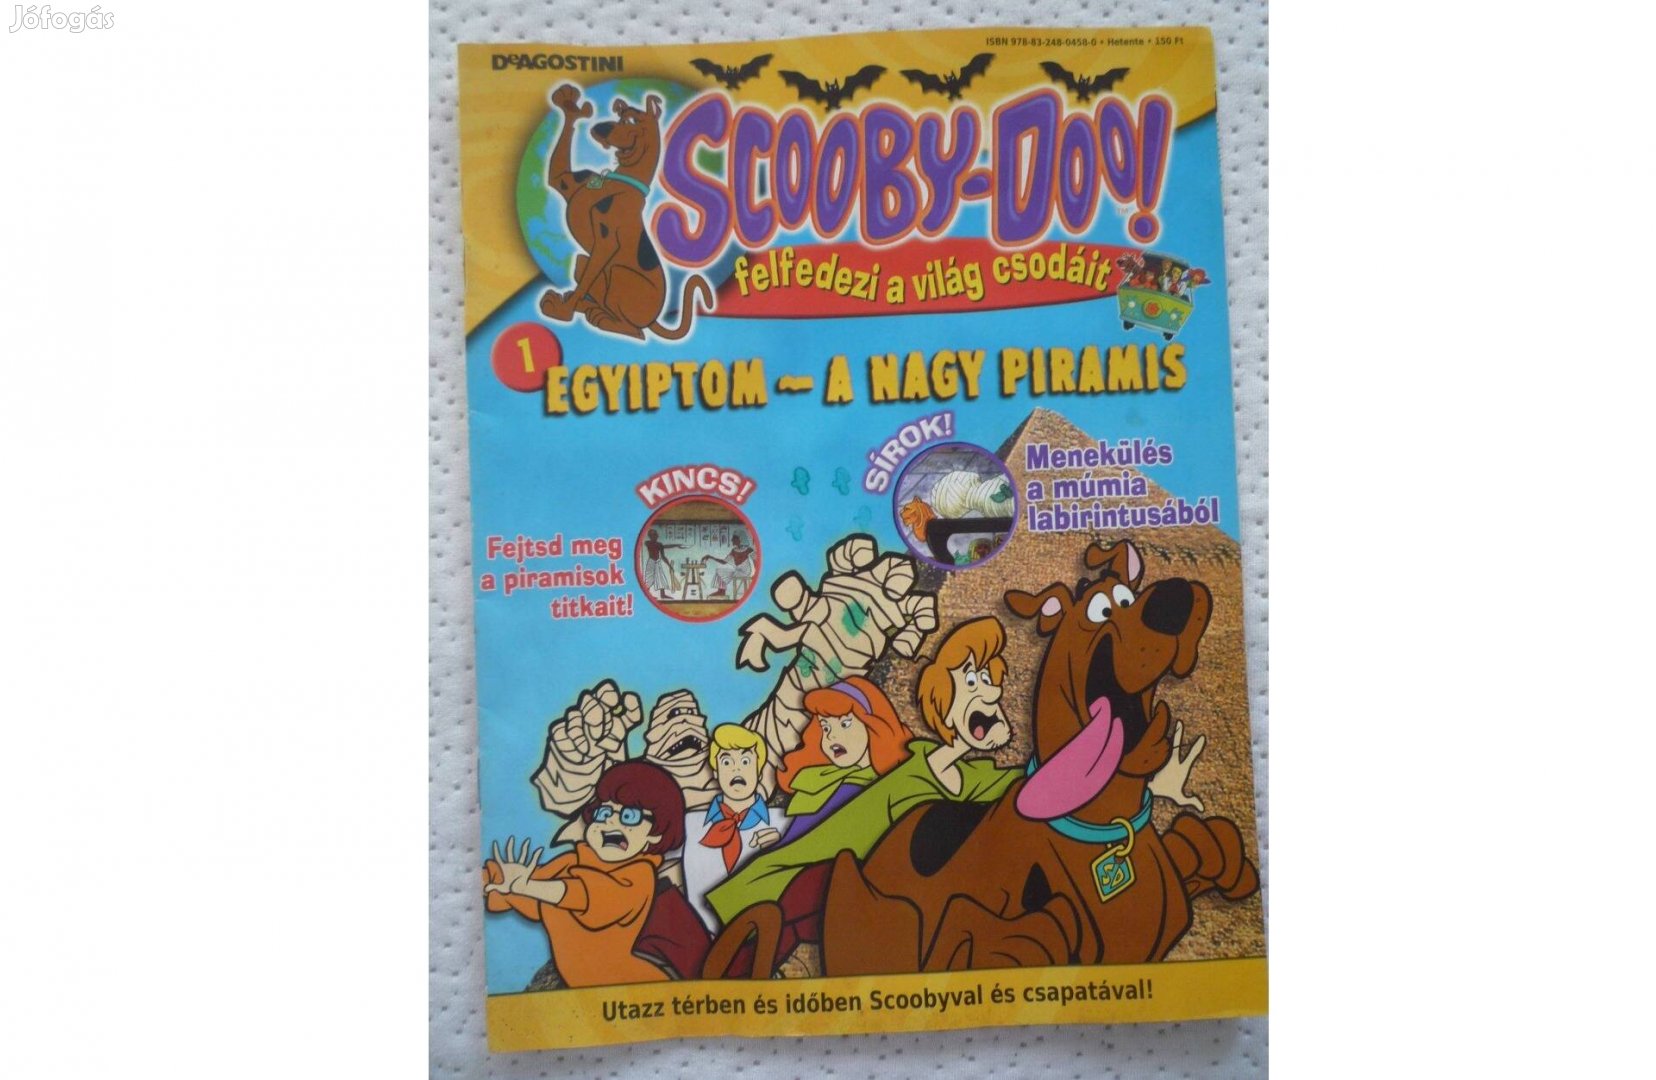 De Agostini-Scooby-doo magazin 2007,2008-as év számai egységáron